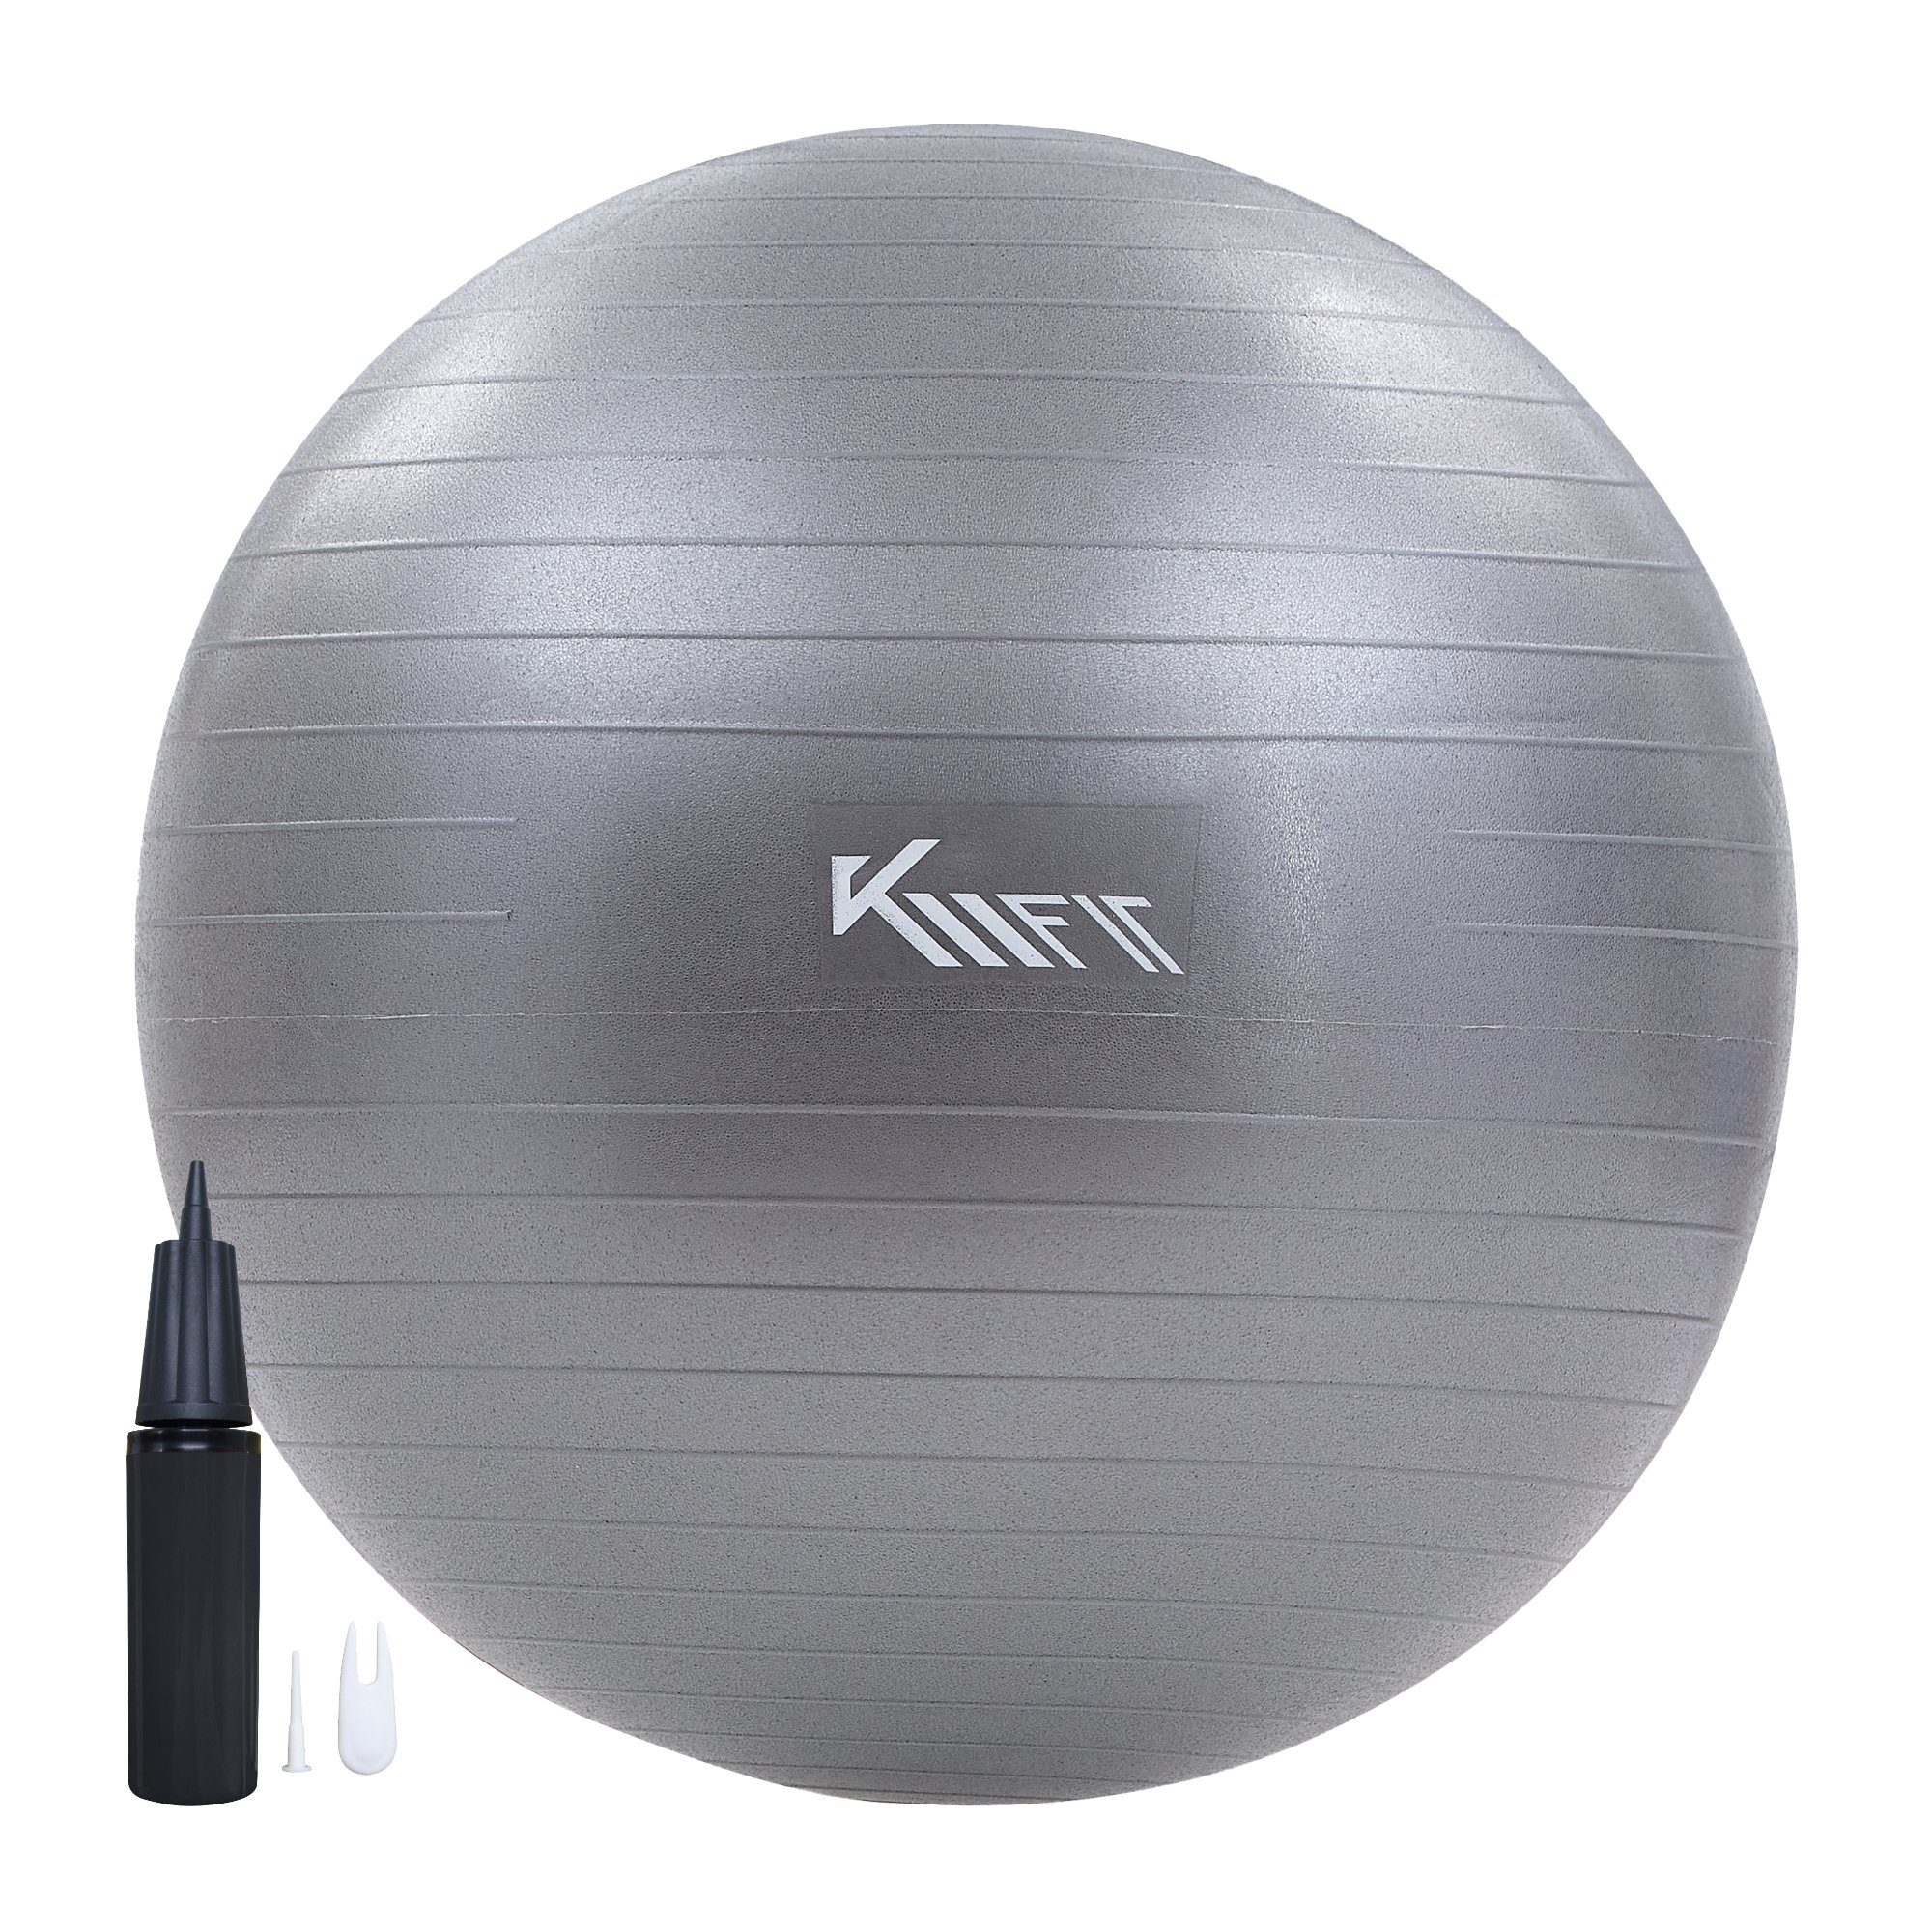 KM - Fit Gymnastikball Trainingsball Sitzball für Fitness,Yoga,Gymnastik 65 cm (mit Luft-Pumpe, Grau), Max. Belastbarkeit: 300 kg